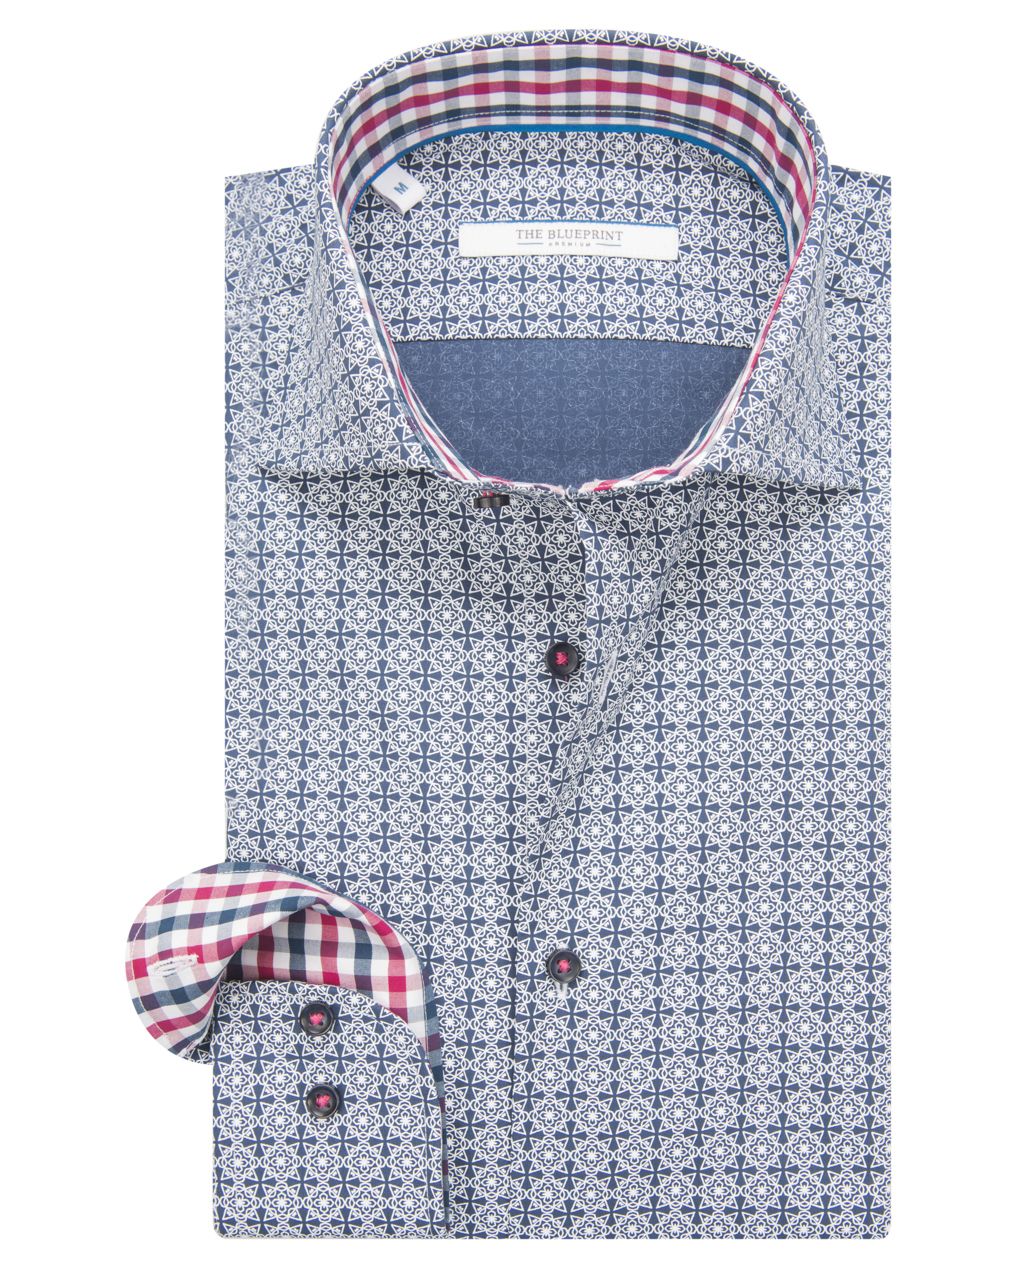 The BLUEPRINT Premium Trendy overhemd LM Donkerblauw print 061882-001-L